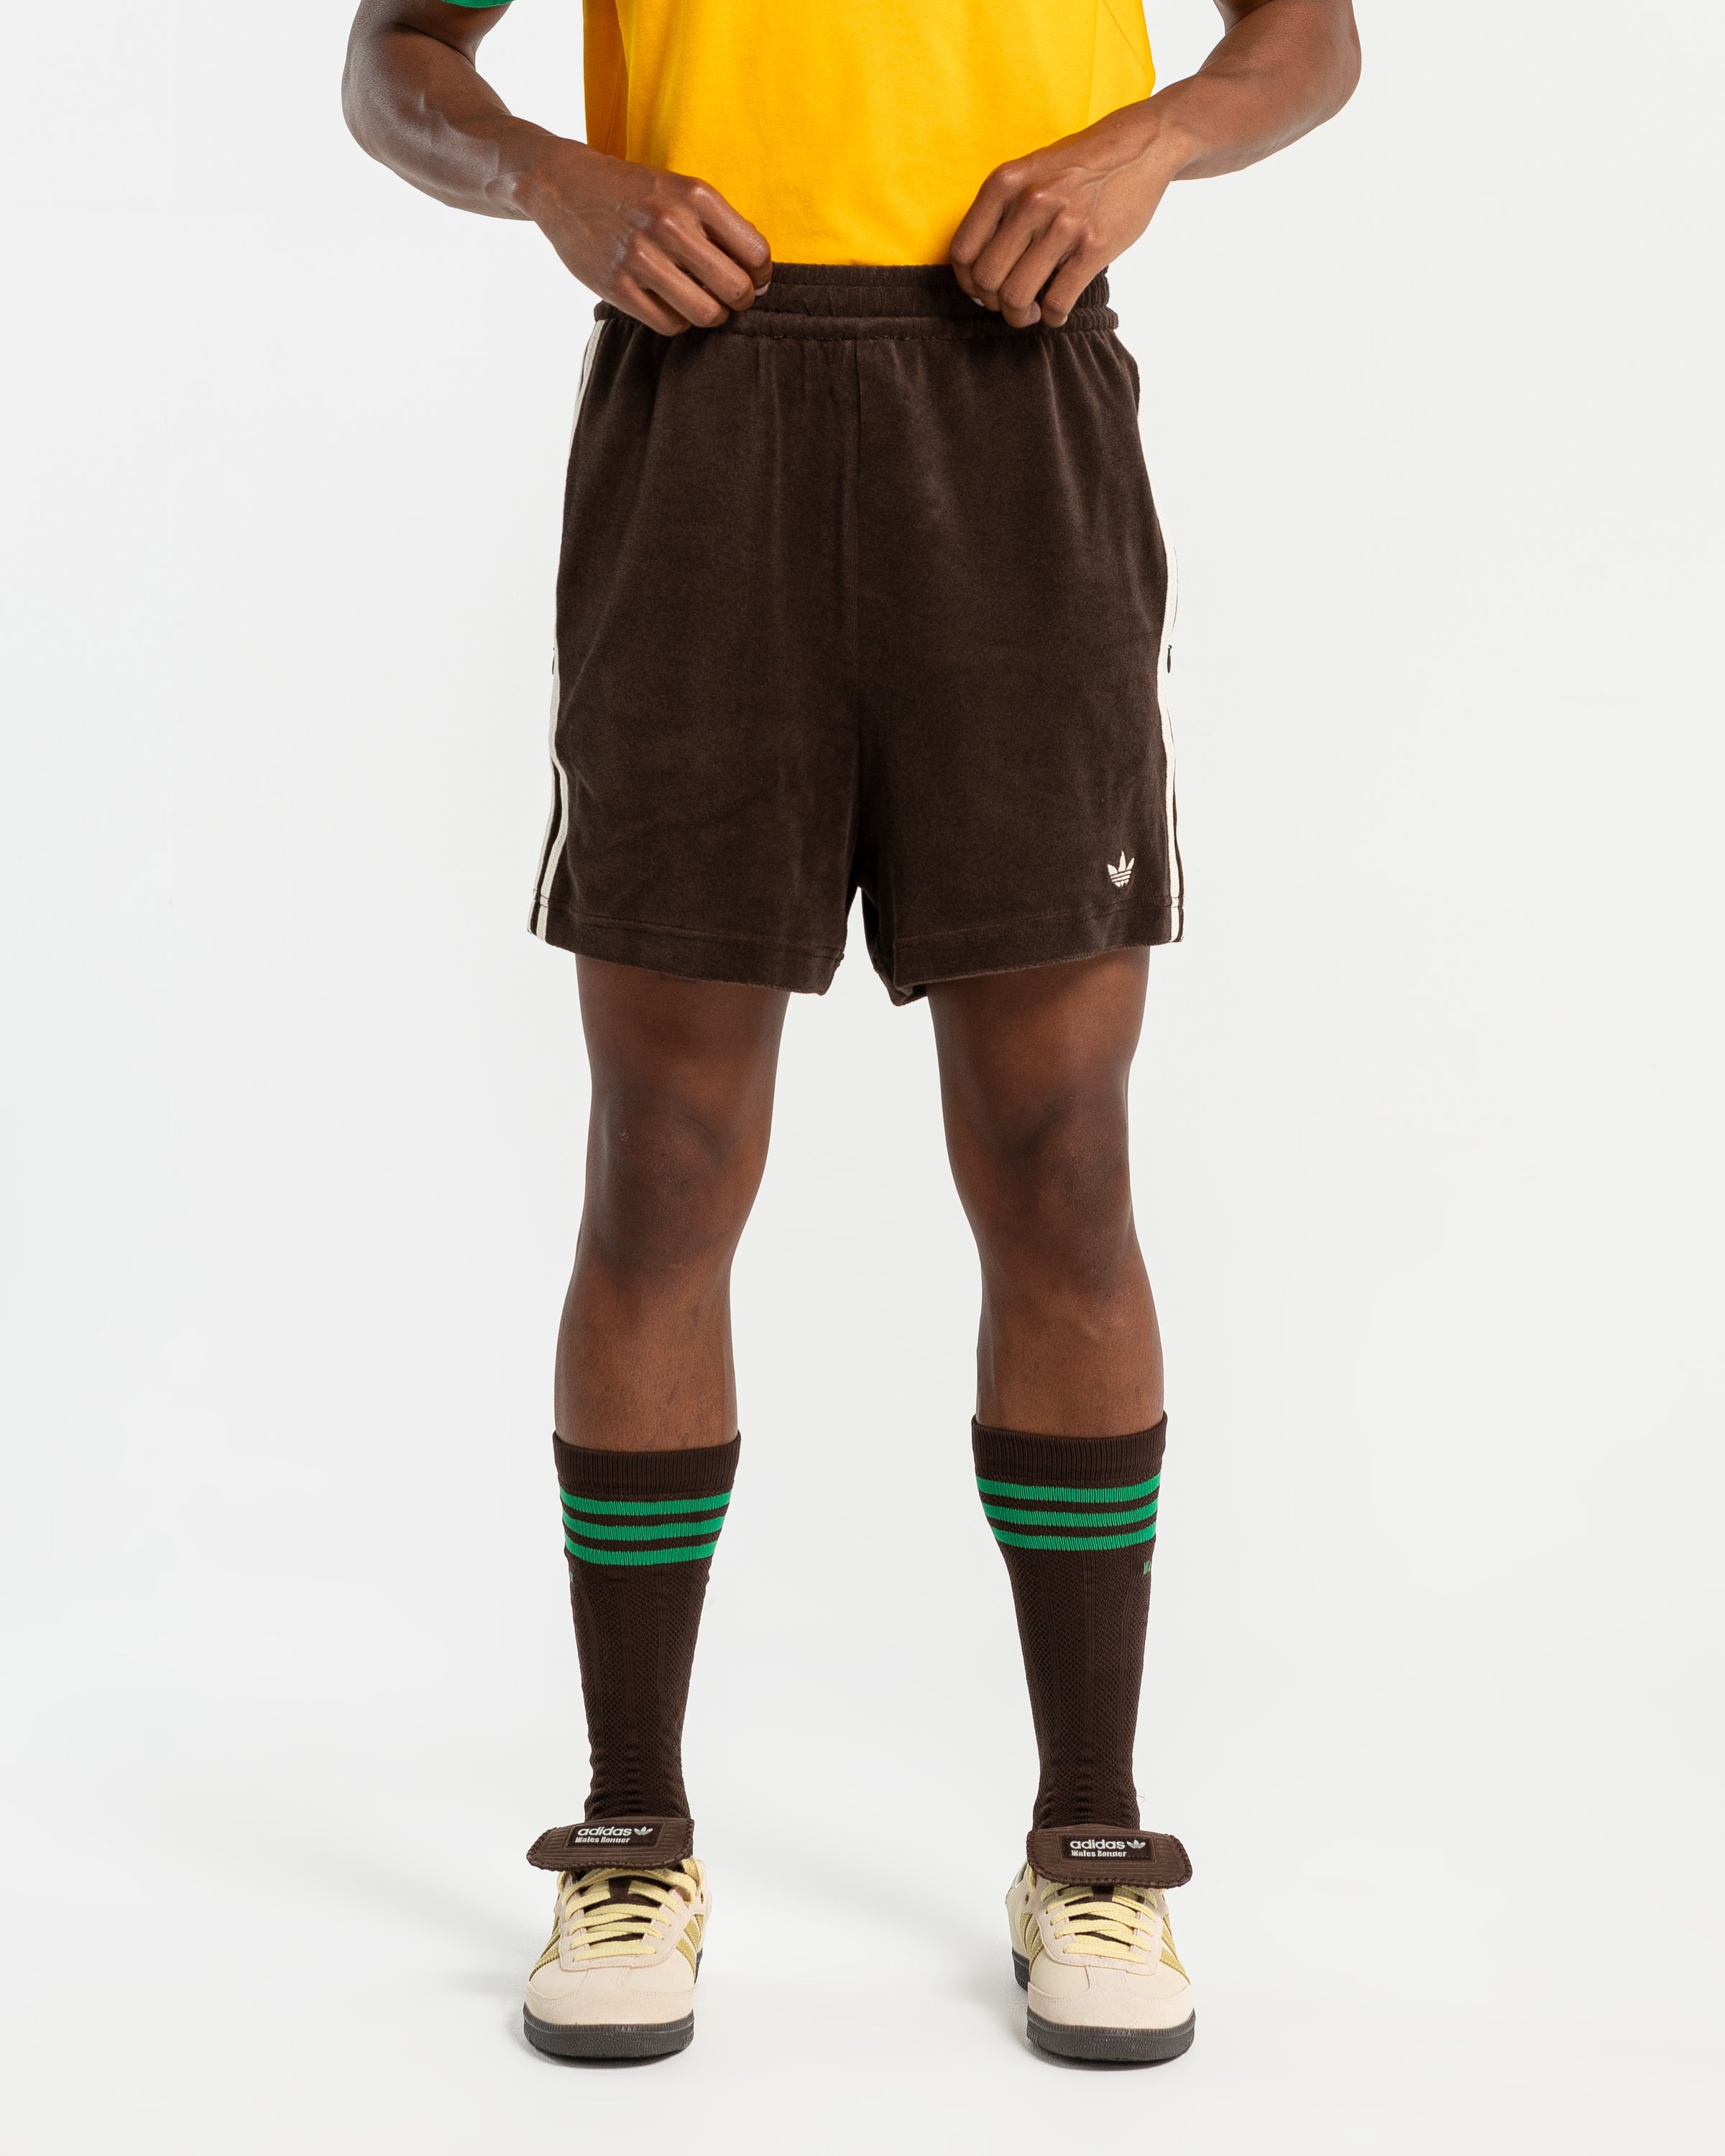 Wales Bonner Twill Shorts in Dark Brown